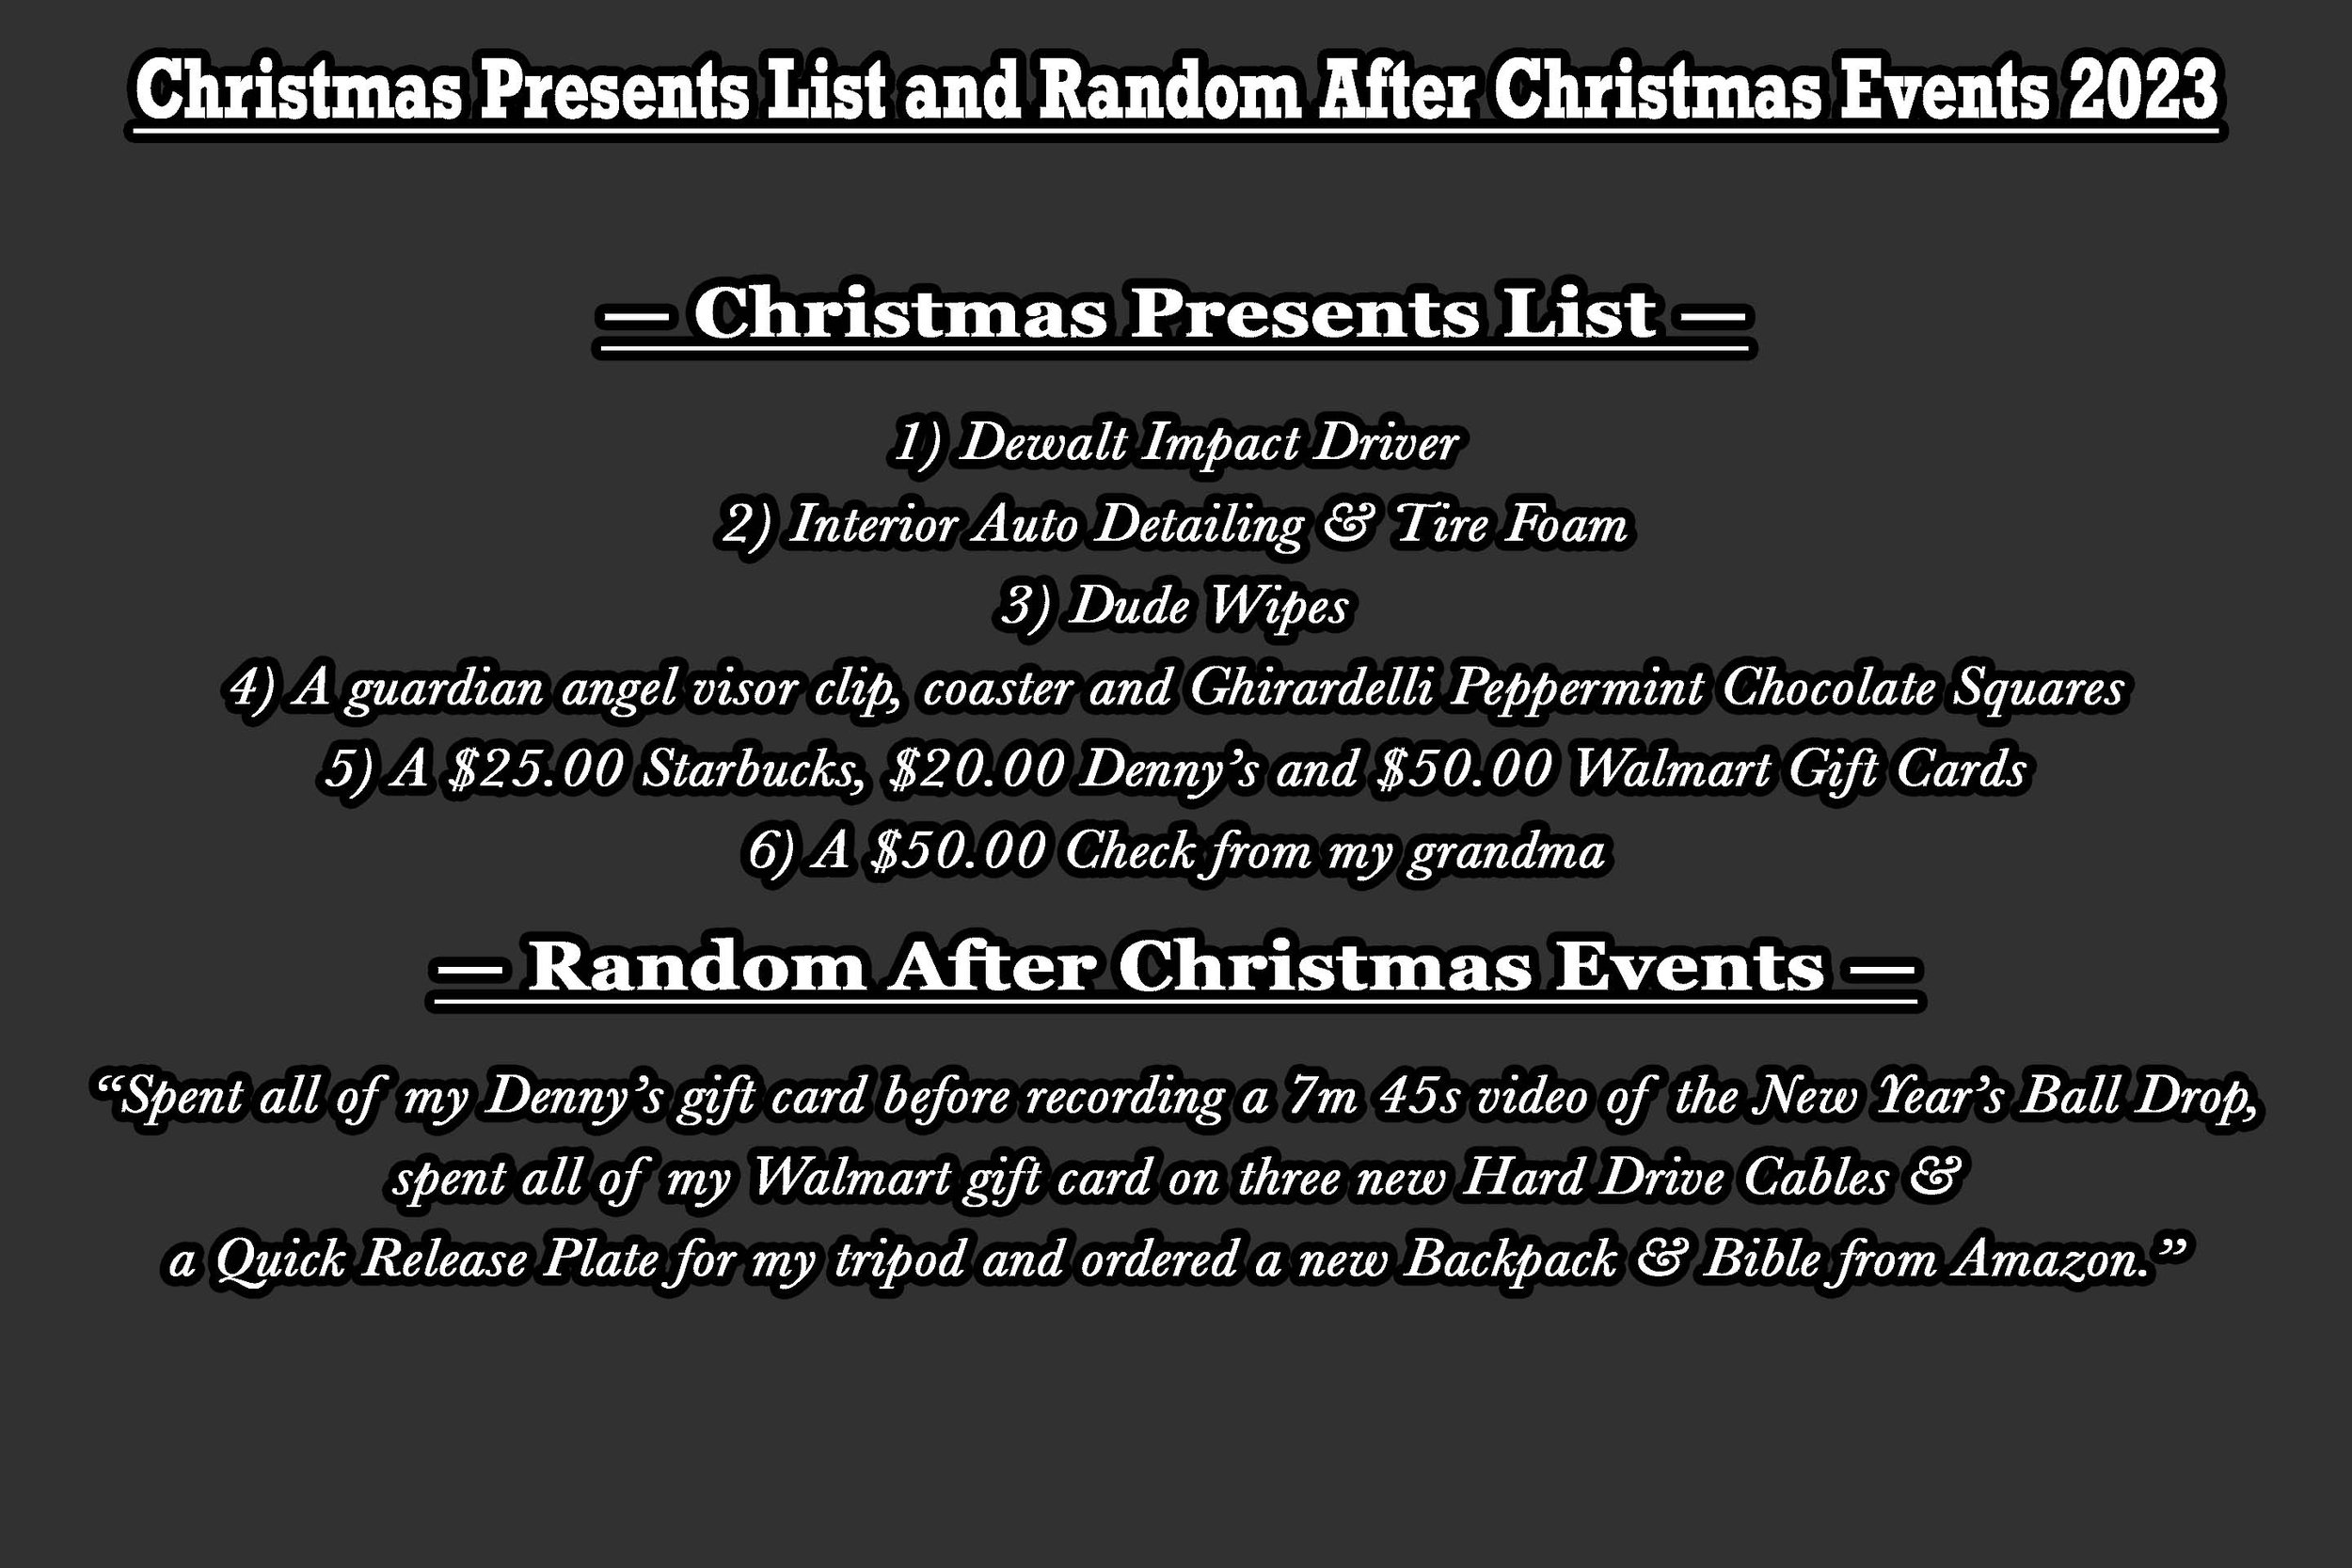 Christmas Presents List and Random After Christmas Events 2023.jpg